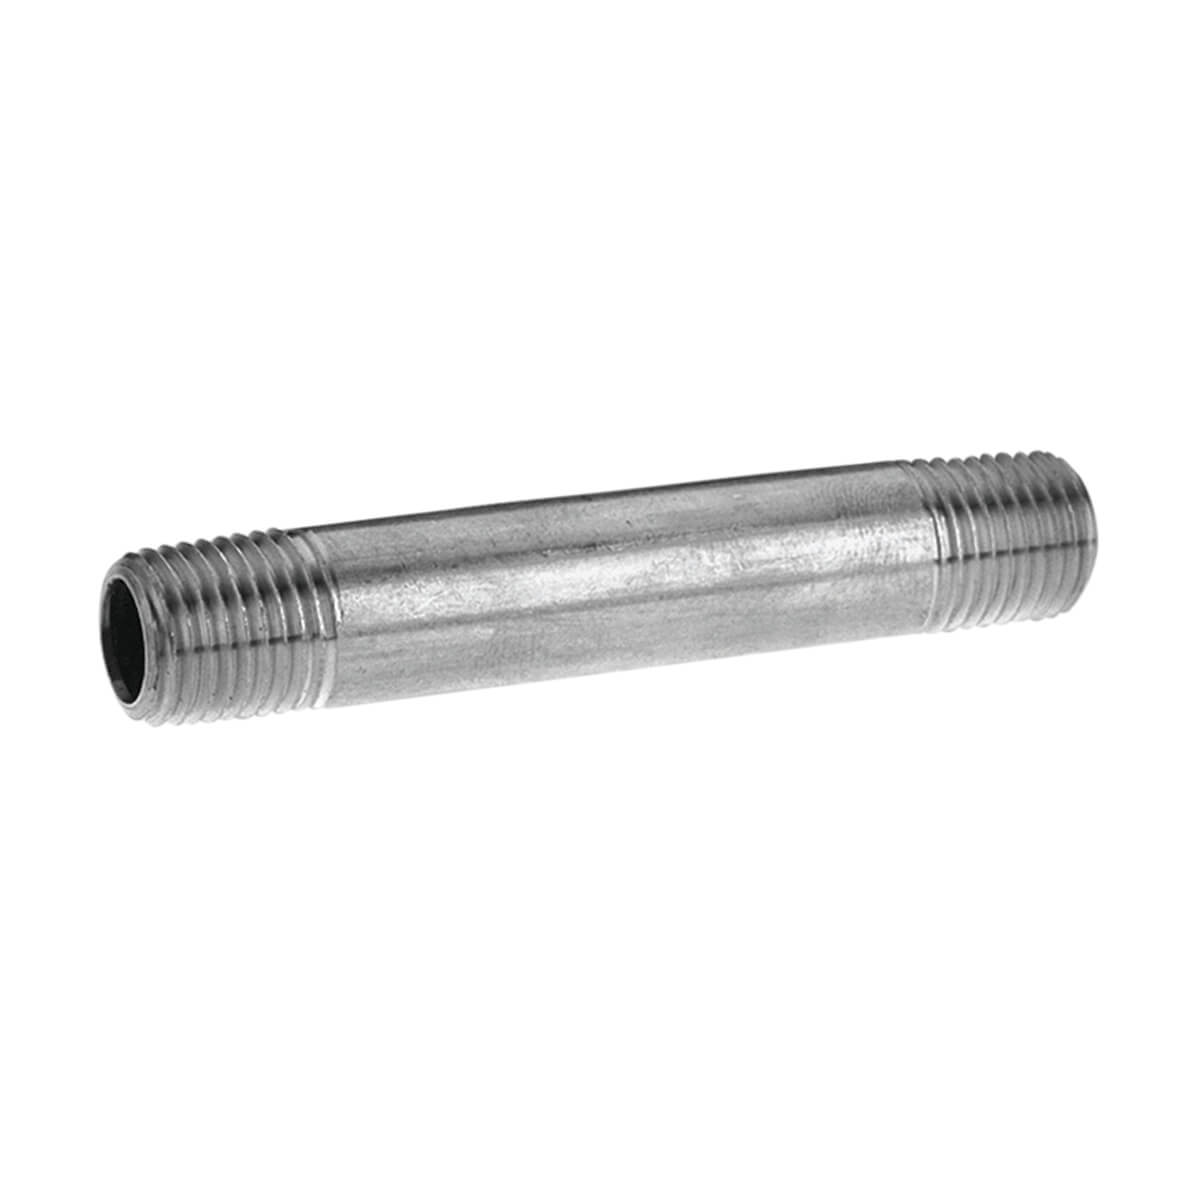 Pipe Nipple Glavanized Steel - 1/2-in x 18-in